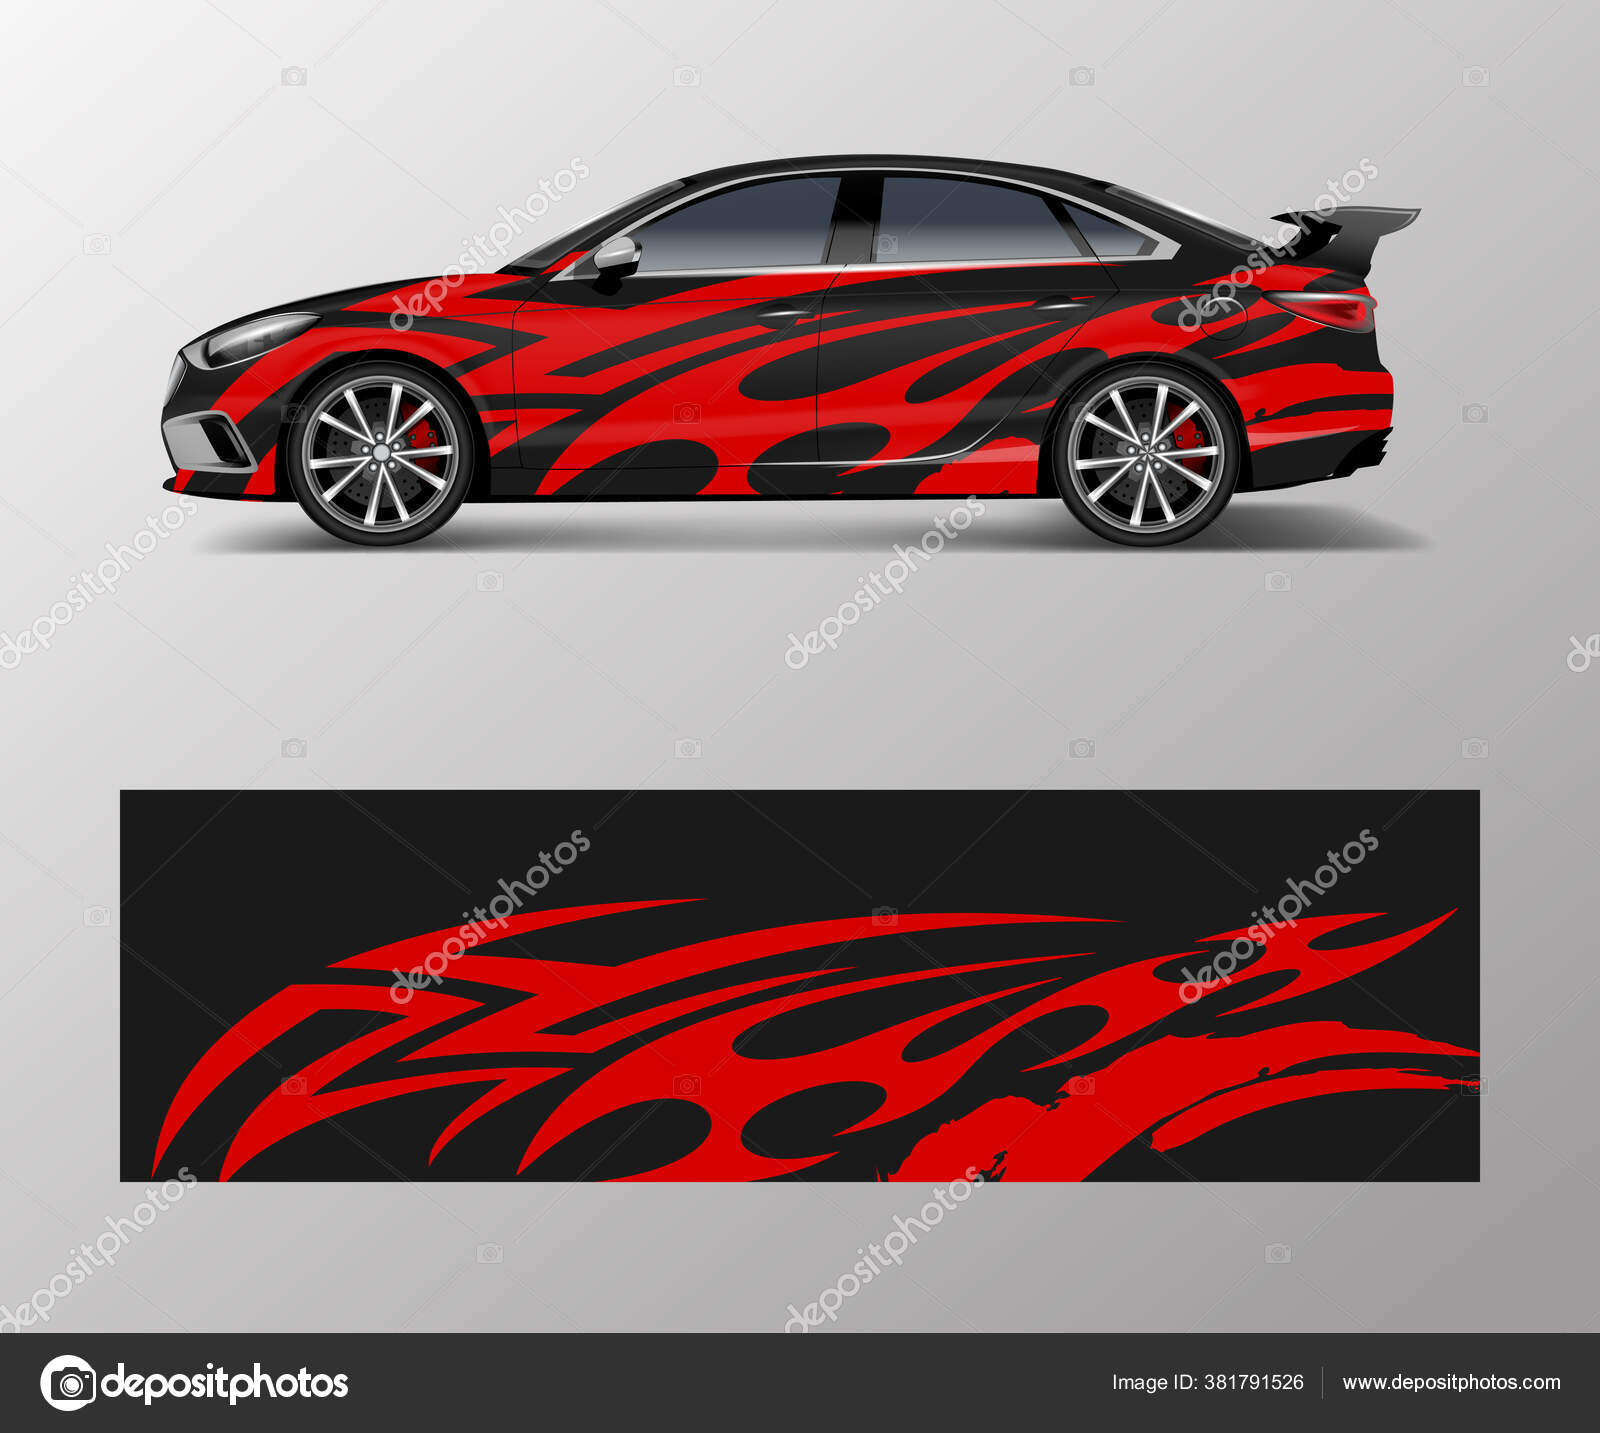 https://st4.depositphotos.com/10849820/38179/v/1600/depositphotos_381791526-stock-illustration-abstract-sport-racing-car-wrap.jpg